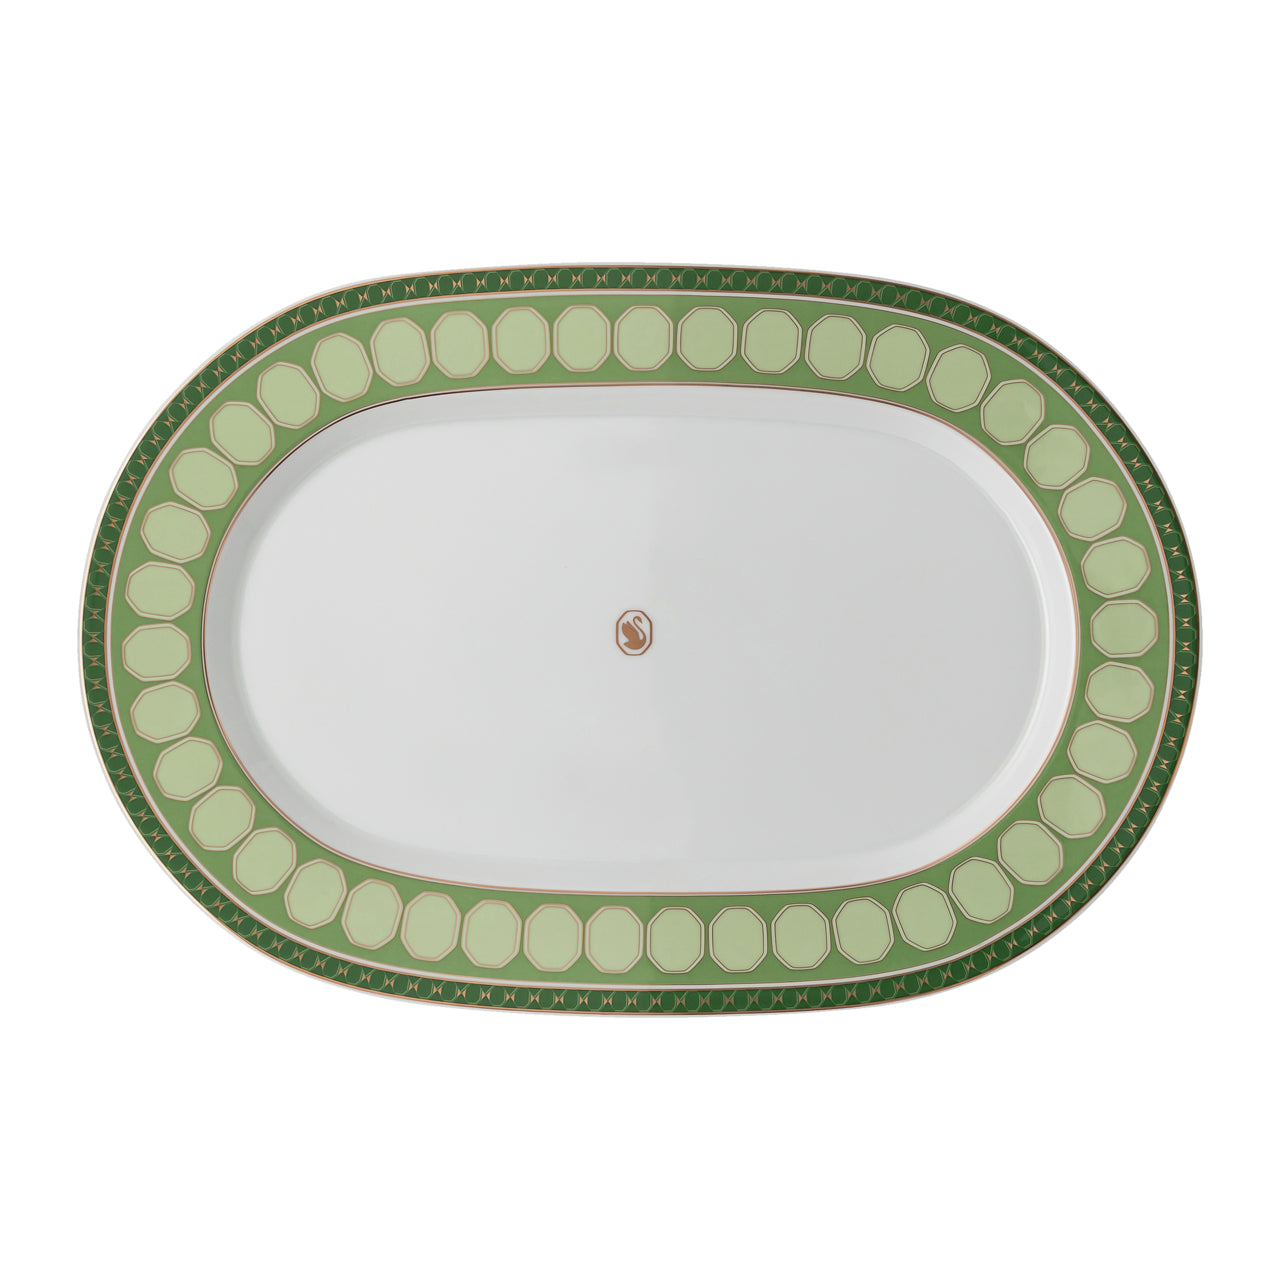 ROSENTHAL Signum Fern Yeşil Oval Porselen Servis Tabağı 40 cm D’Maison 